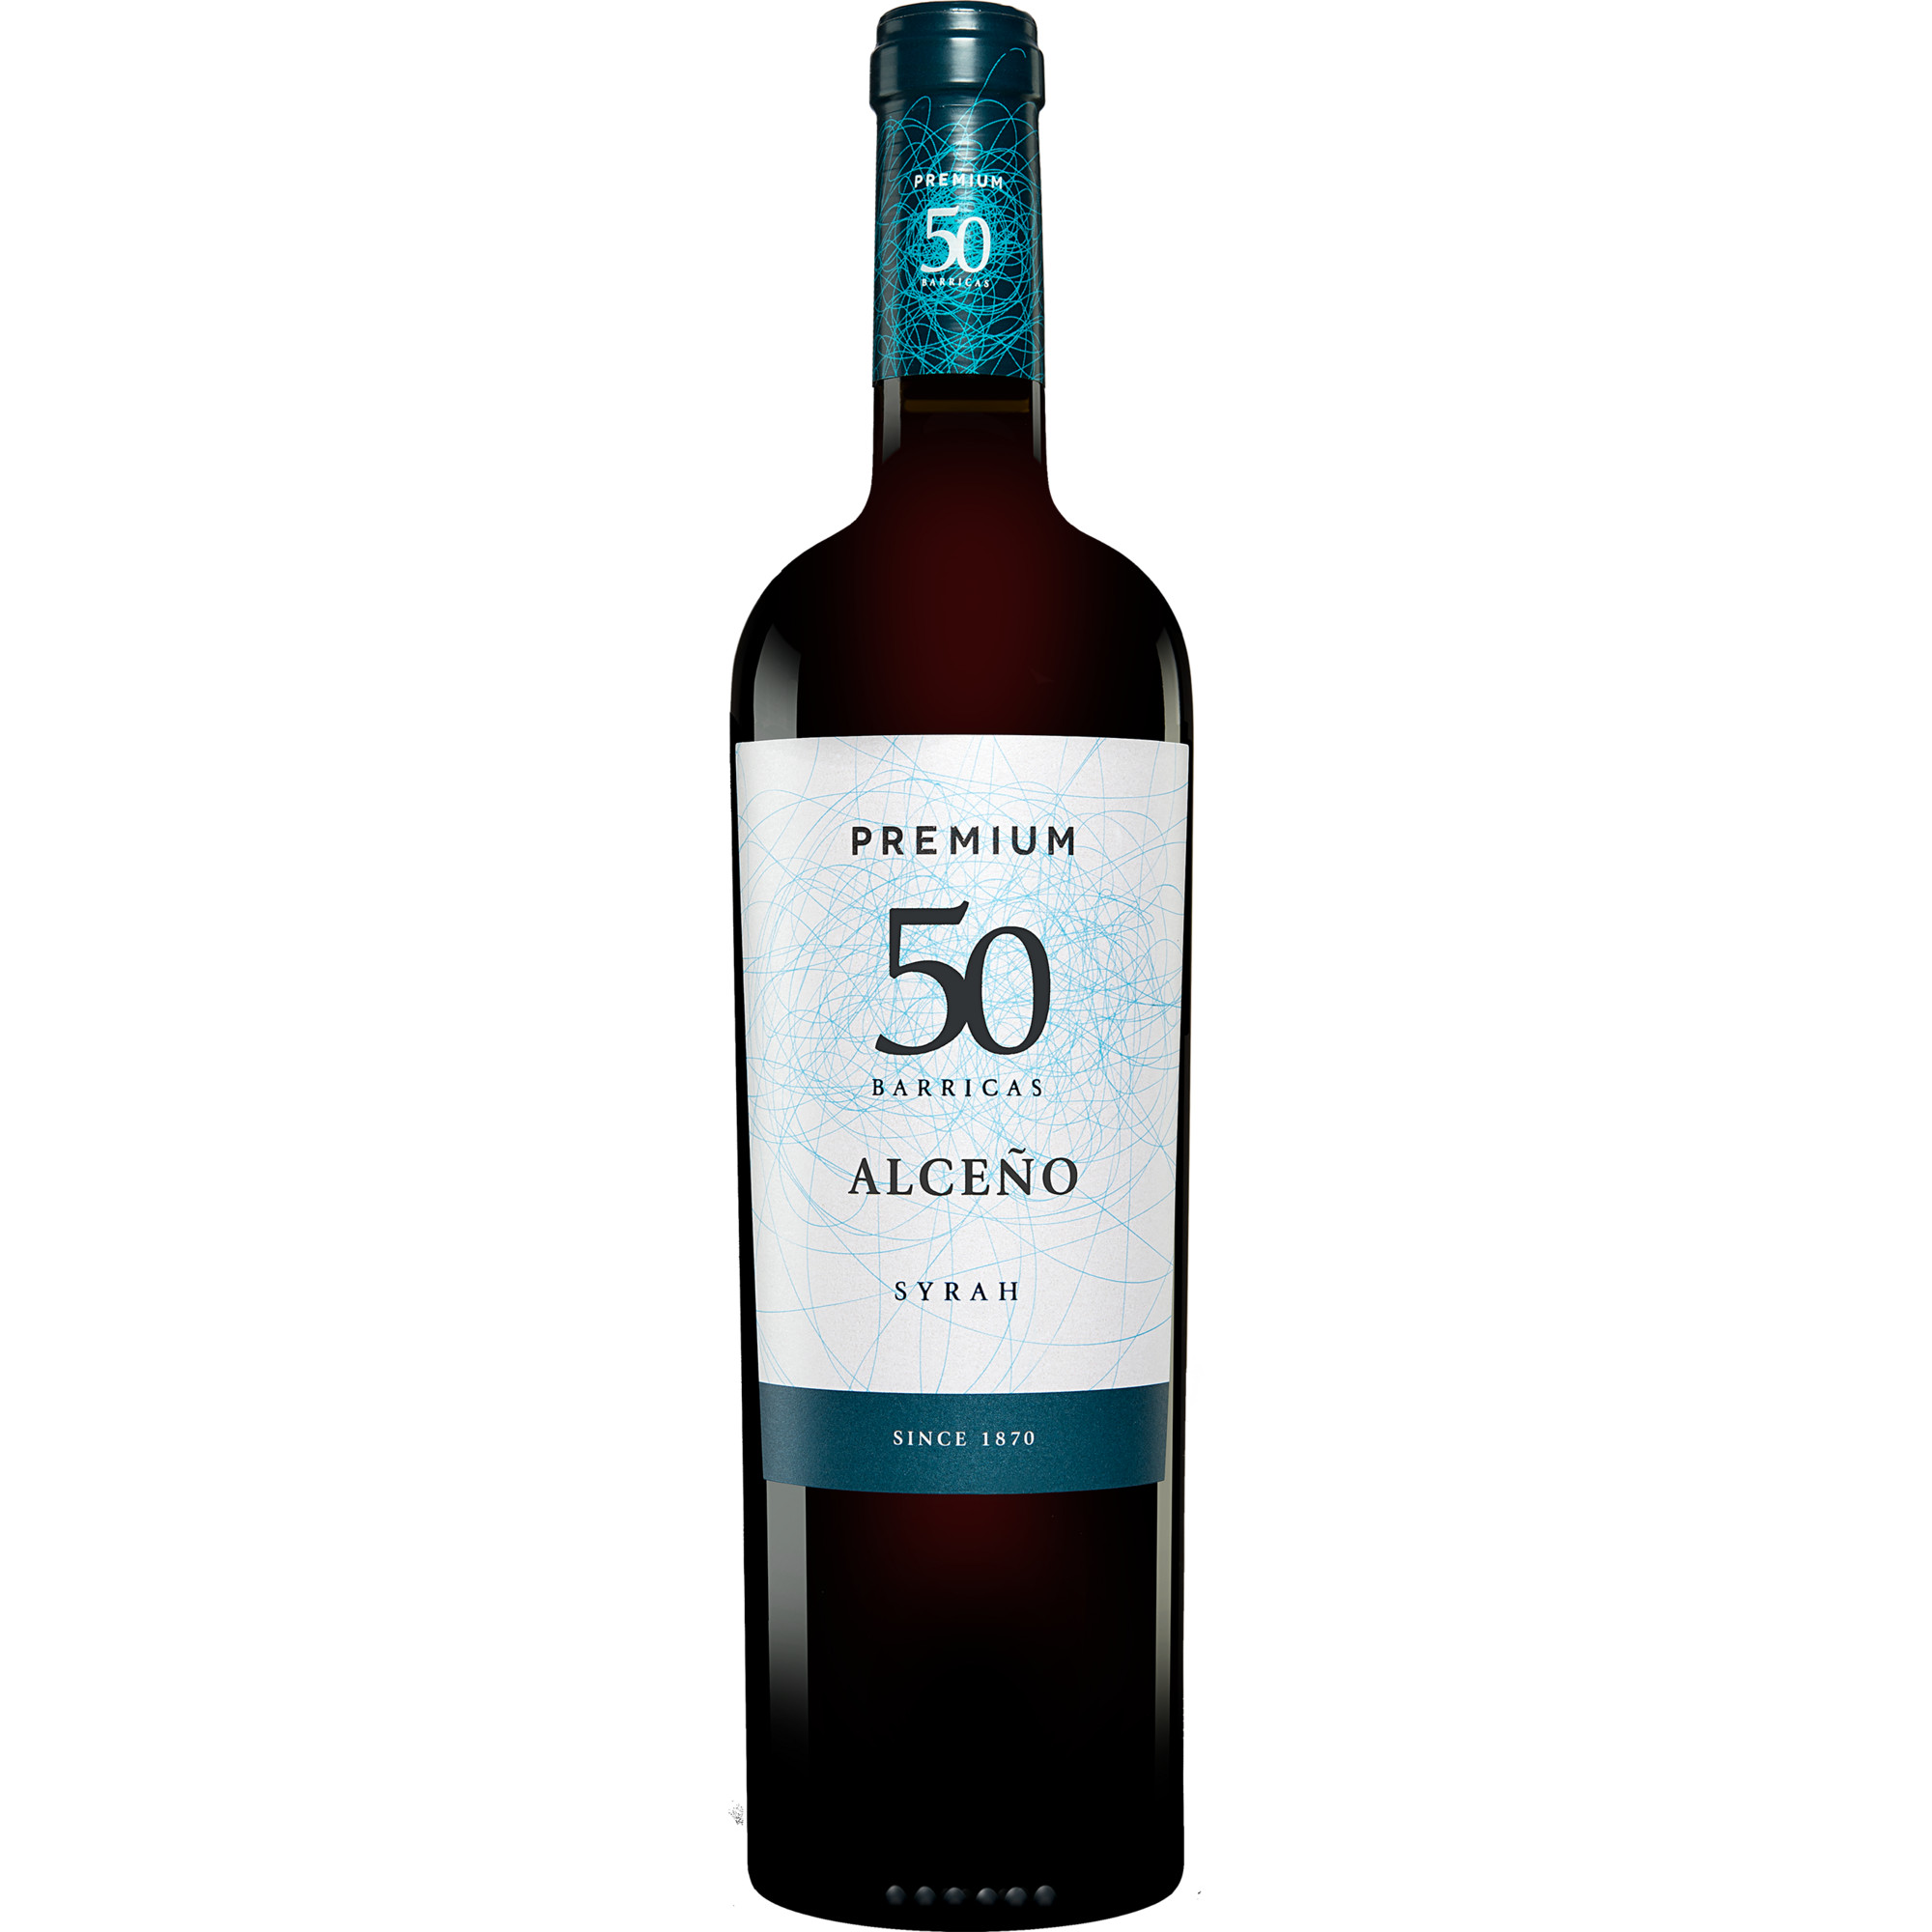 Image of Alceño Premium 50 Barricas Syrah 2018